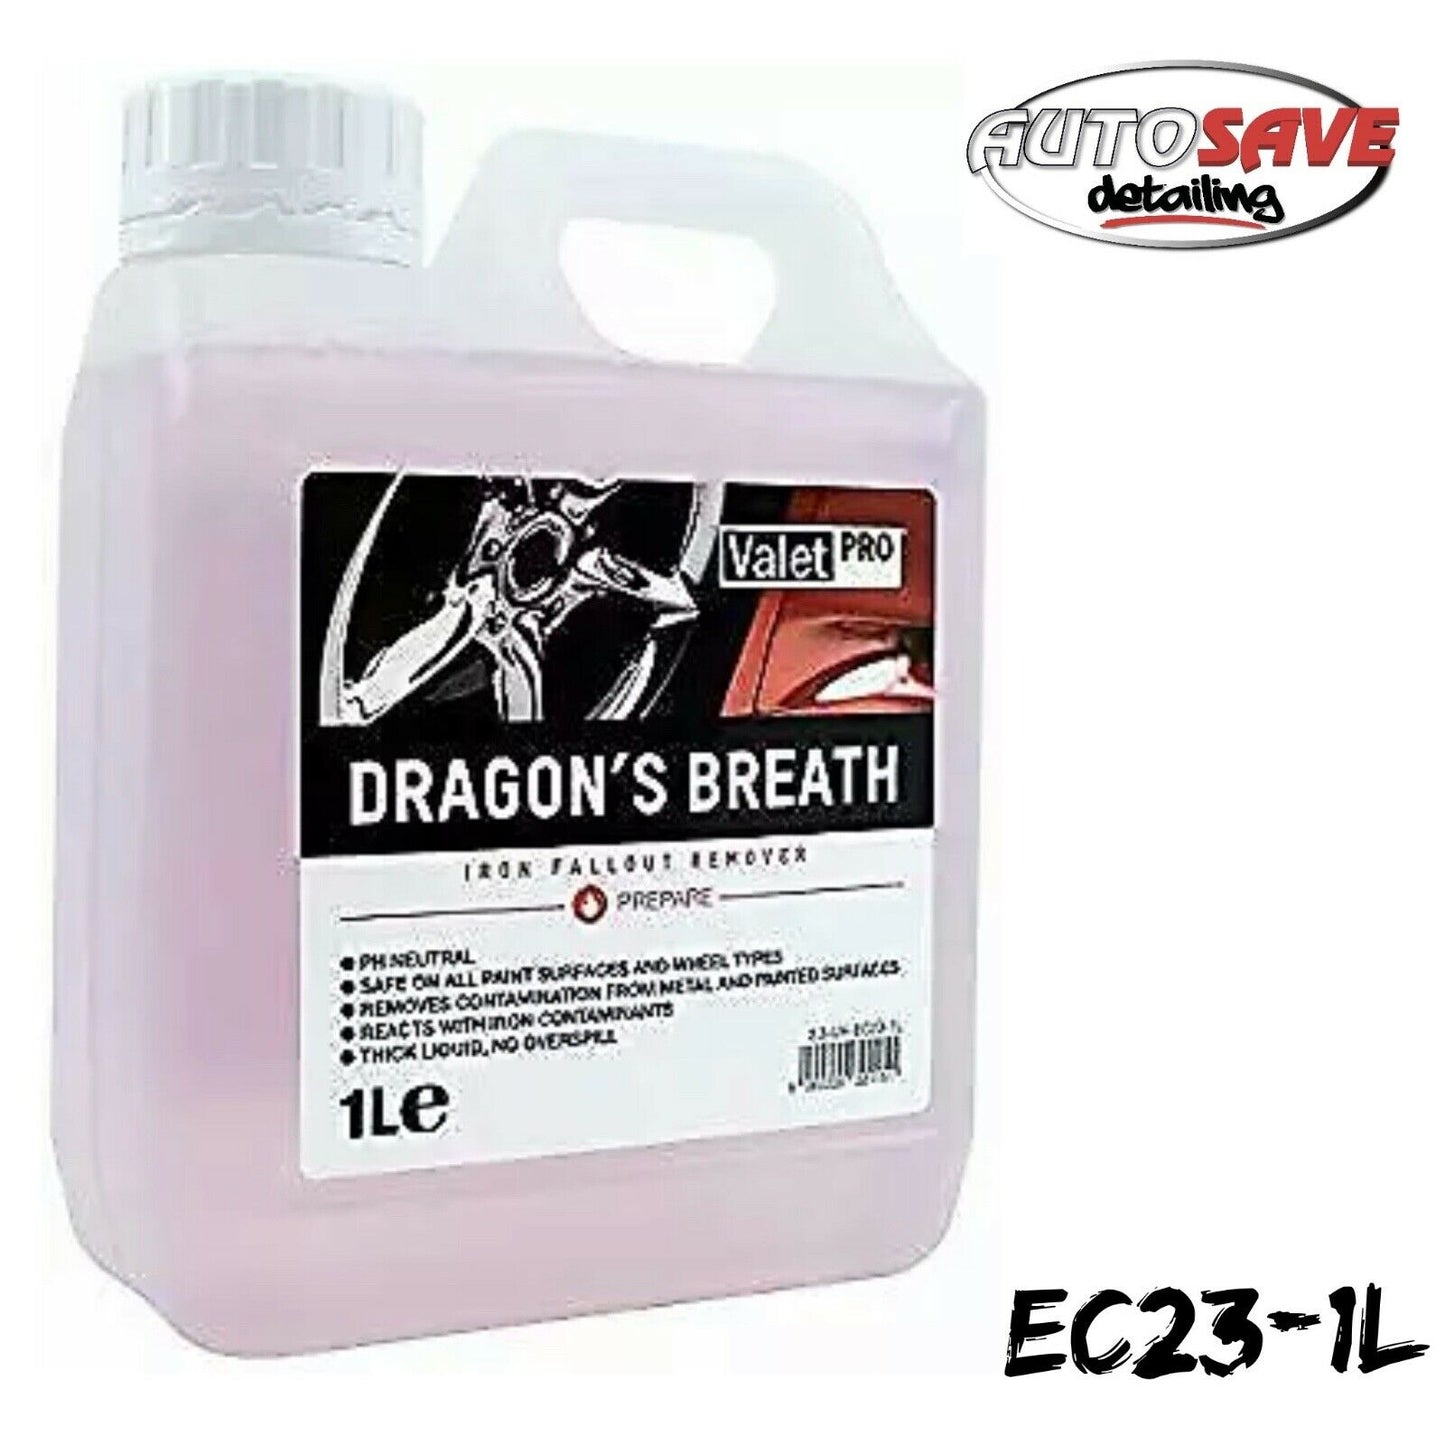 Valet Pro Dragons Breath 1LTR   EC23-1L